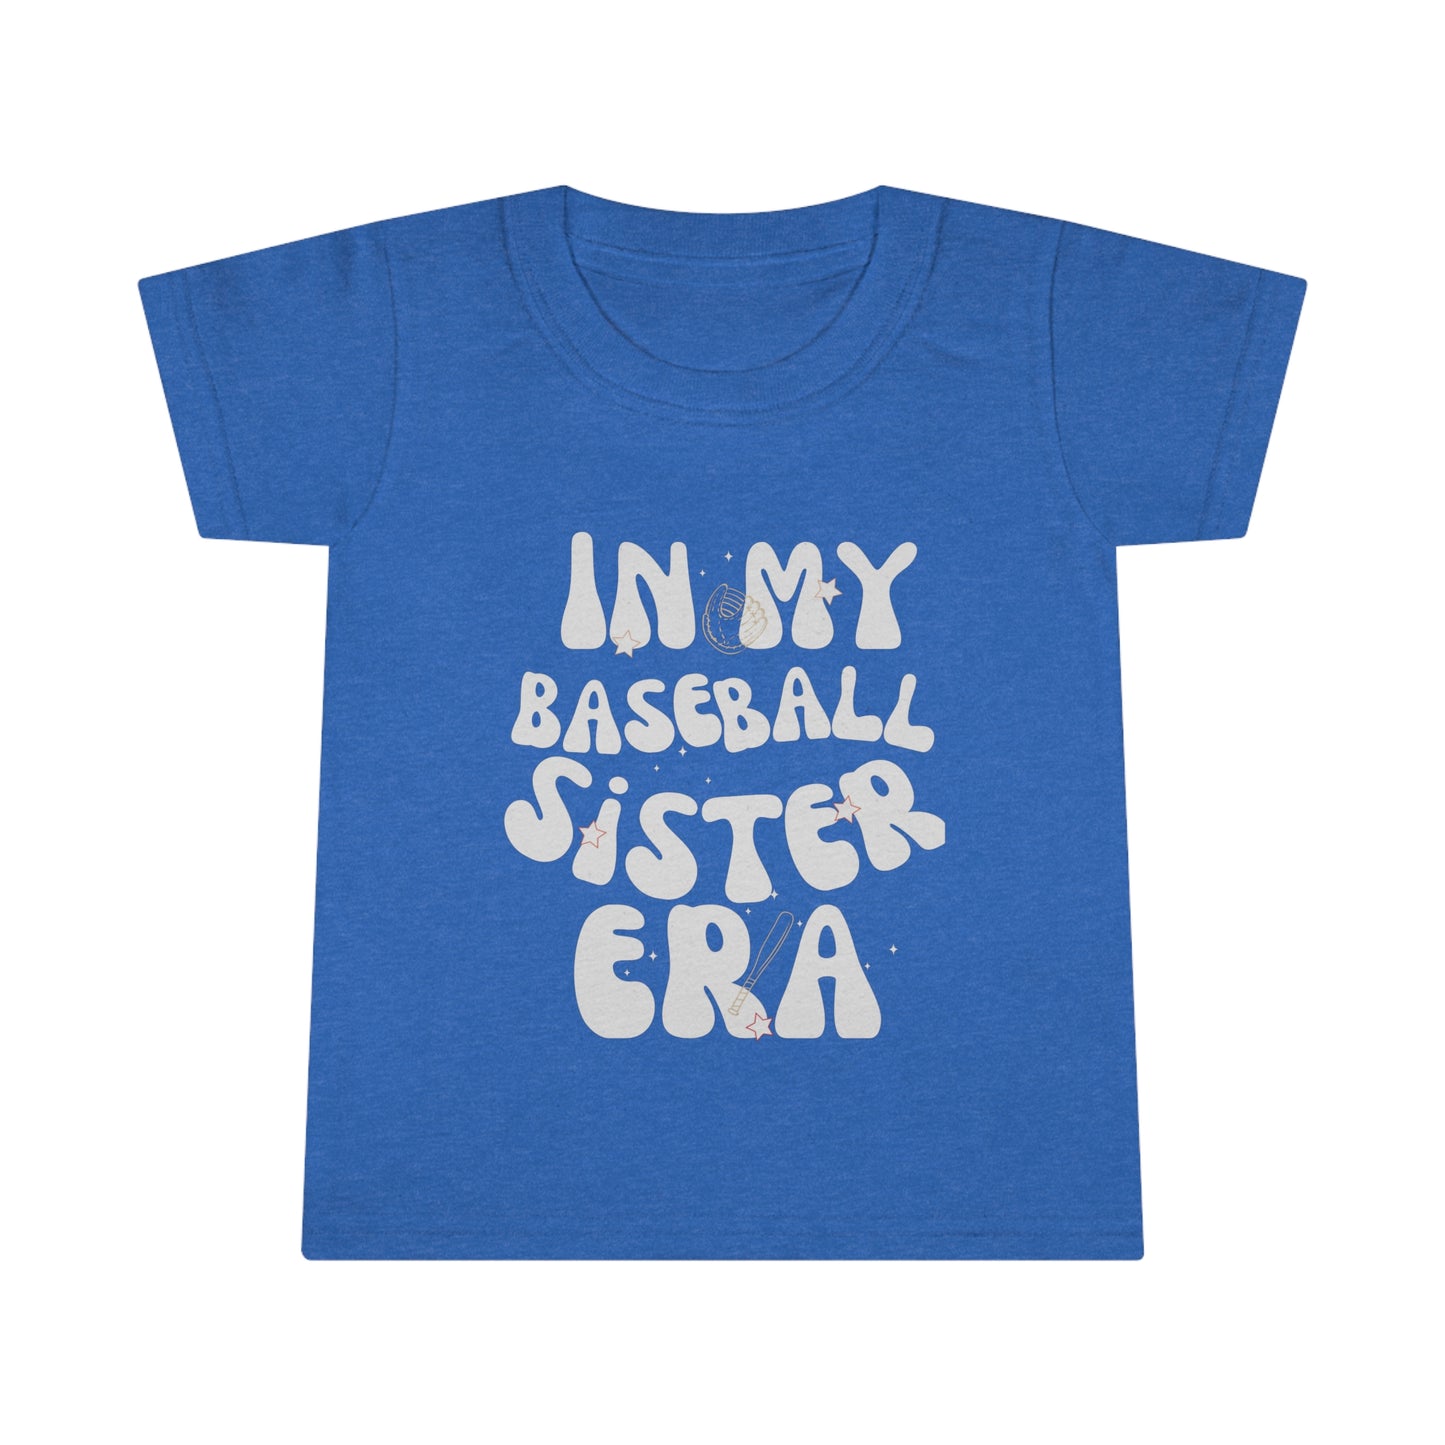 In My Baseball Sister Era - Toddler T-shirt